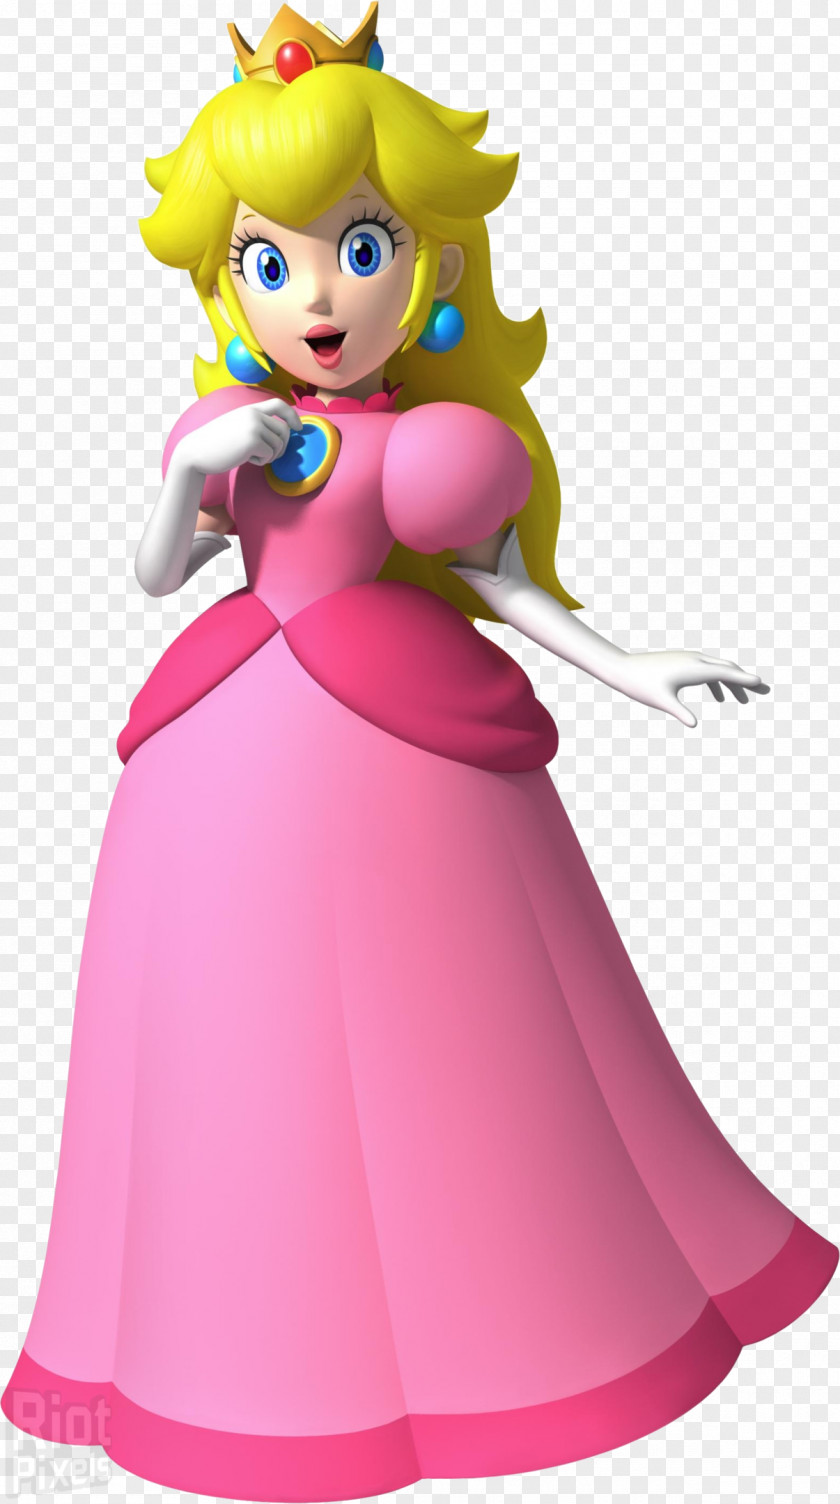 Peach Super Mario Bros. Princess Bowser Video Game PNG